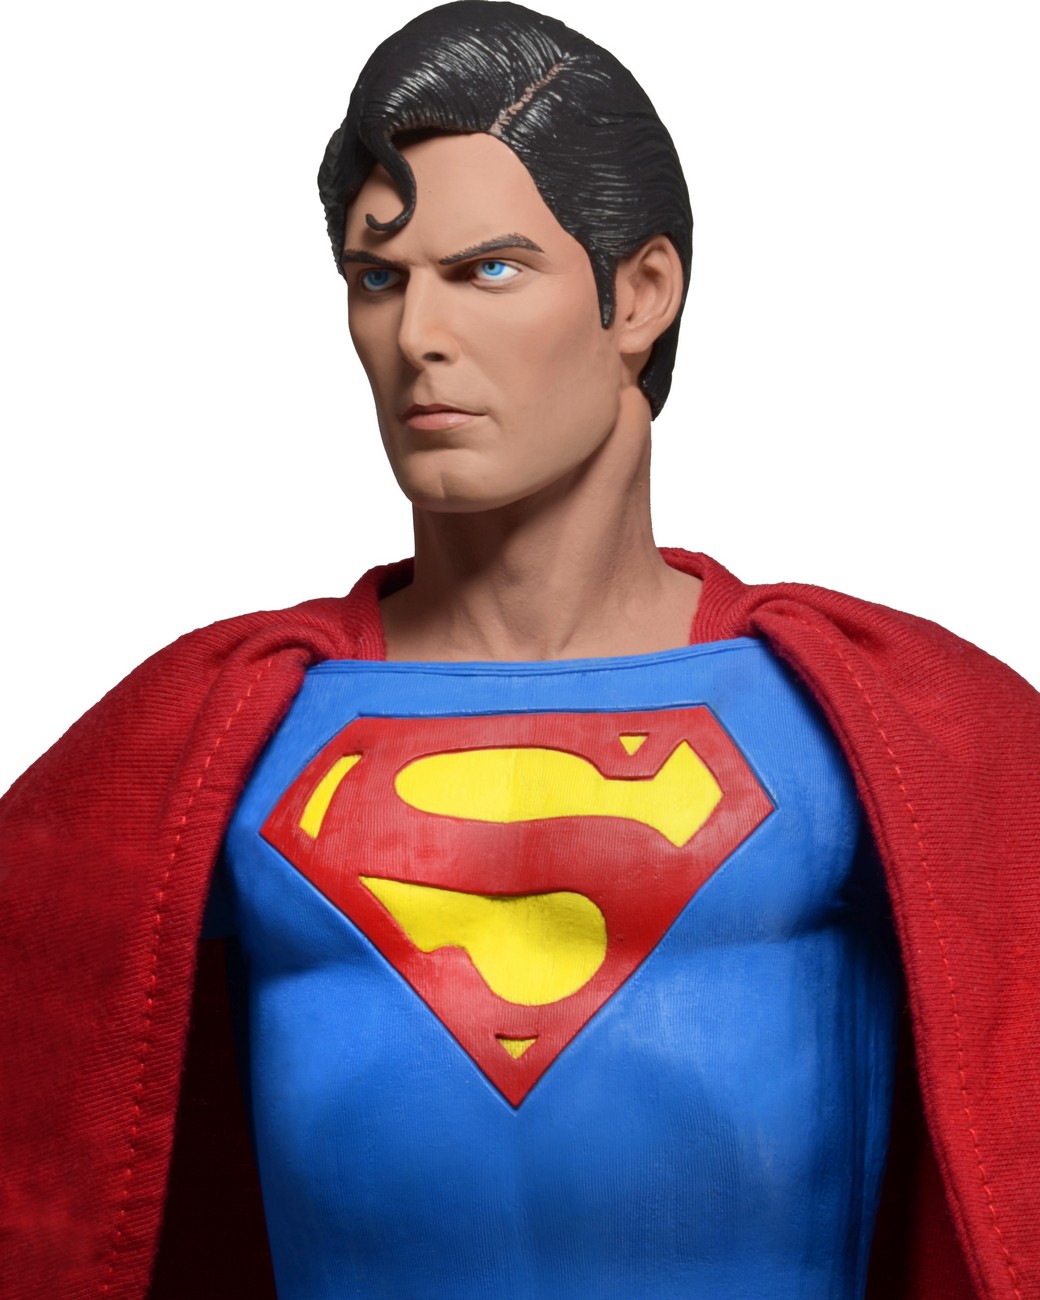 superman christopher reeve figure